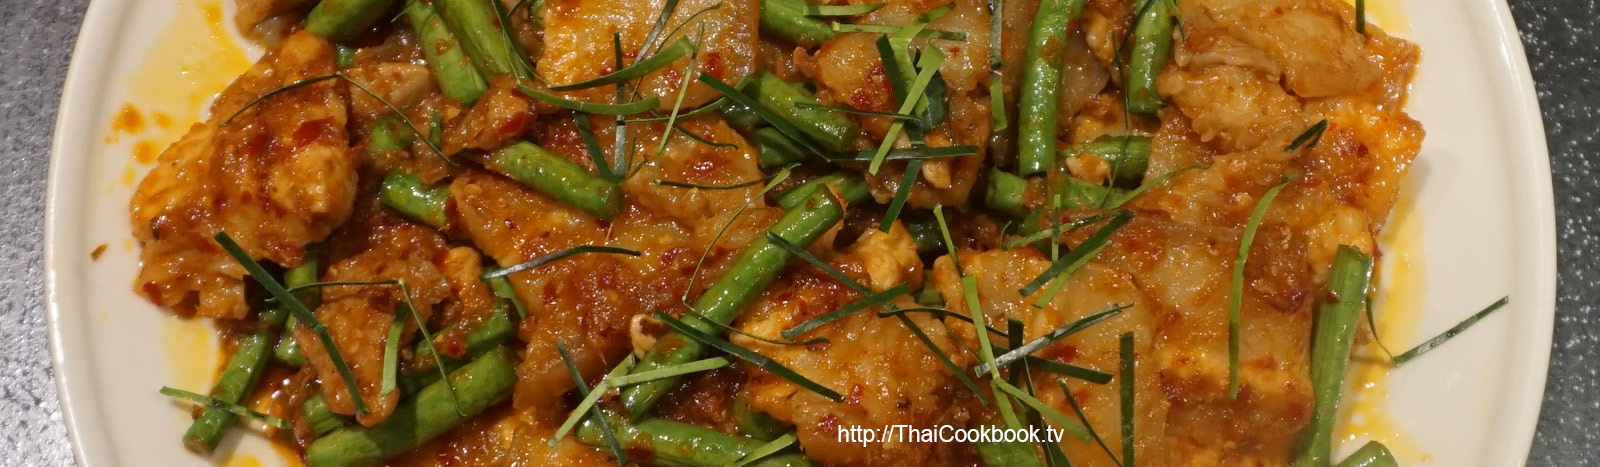 Authentic Thai recipe for Spicy Pork Stir Fry